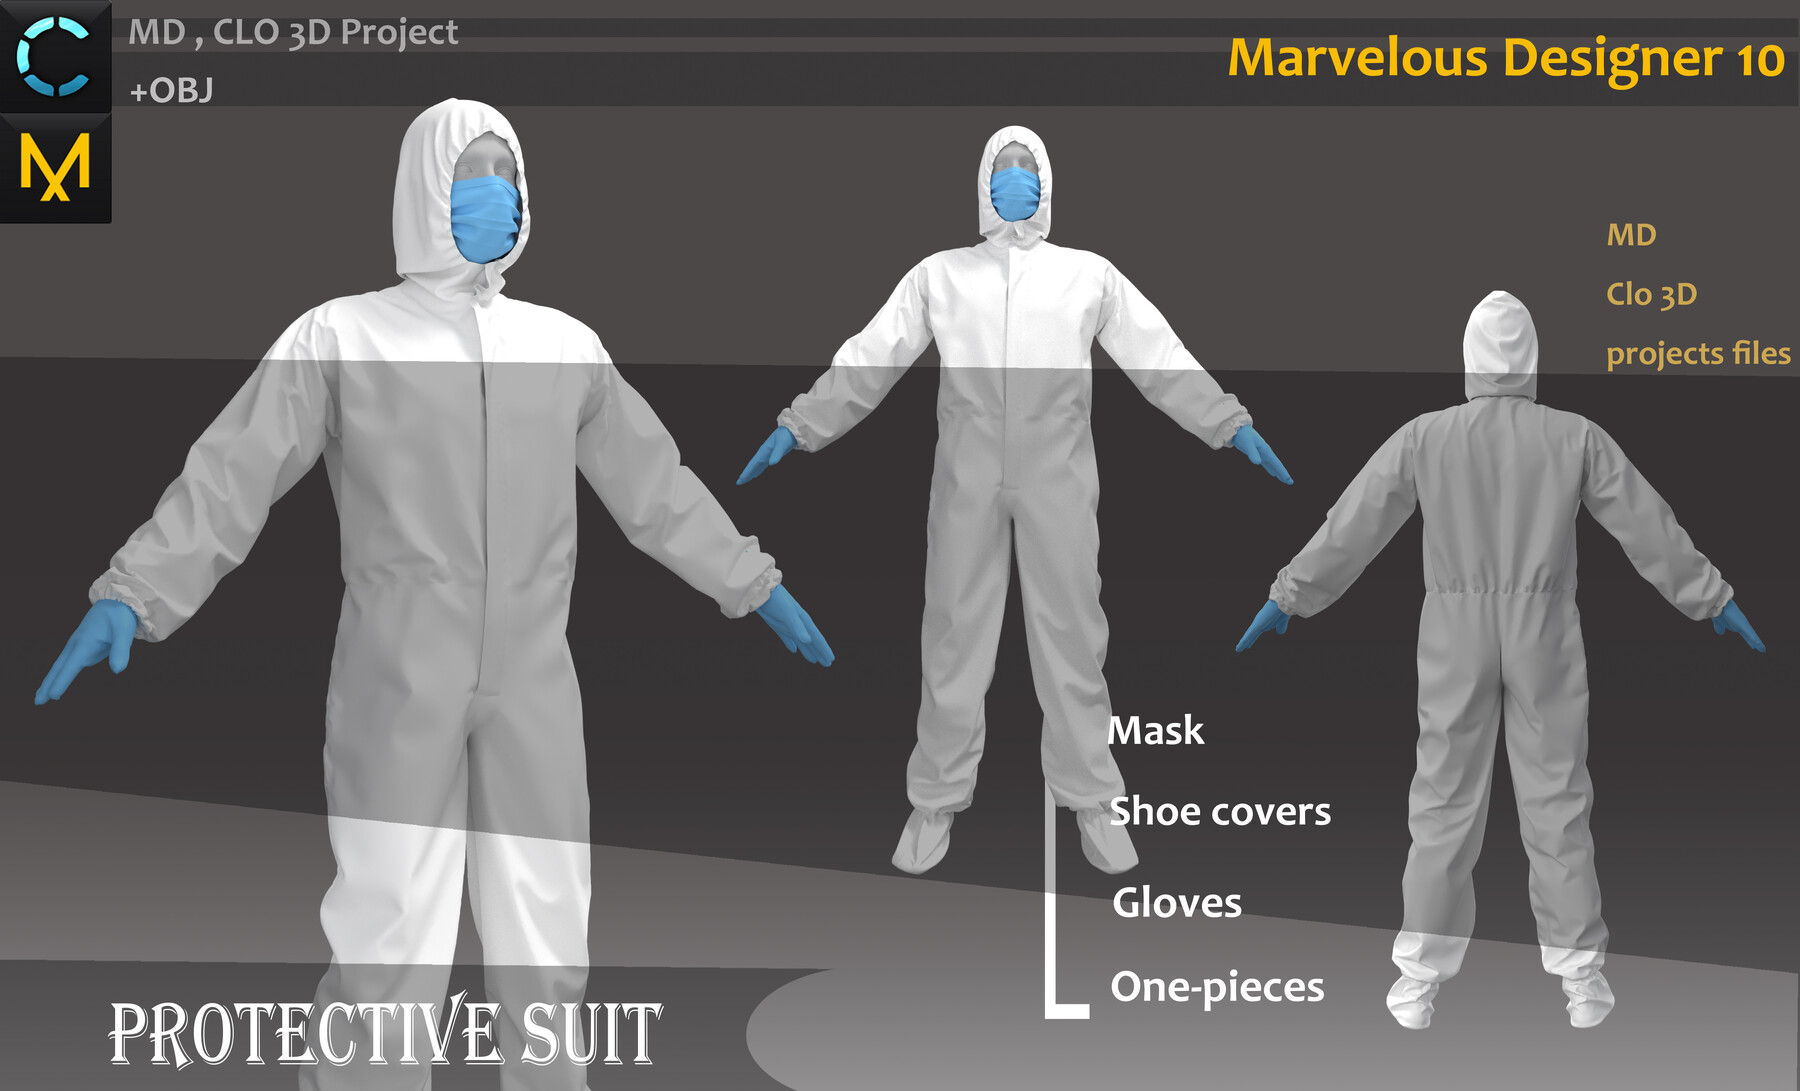 ArtStation - Protective/Hazmat Suit_Medical Disposable Protective ...